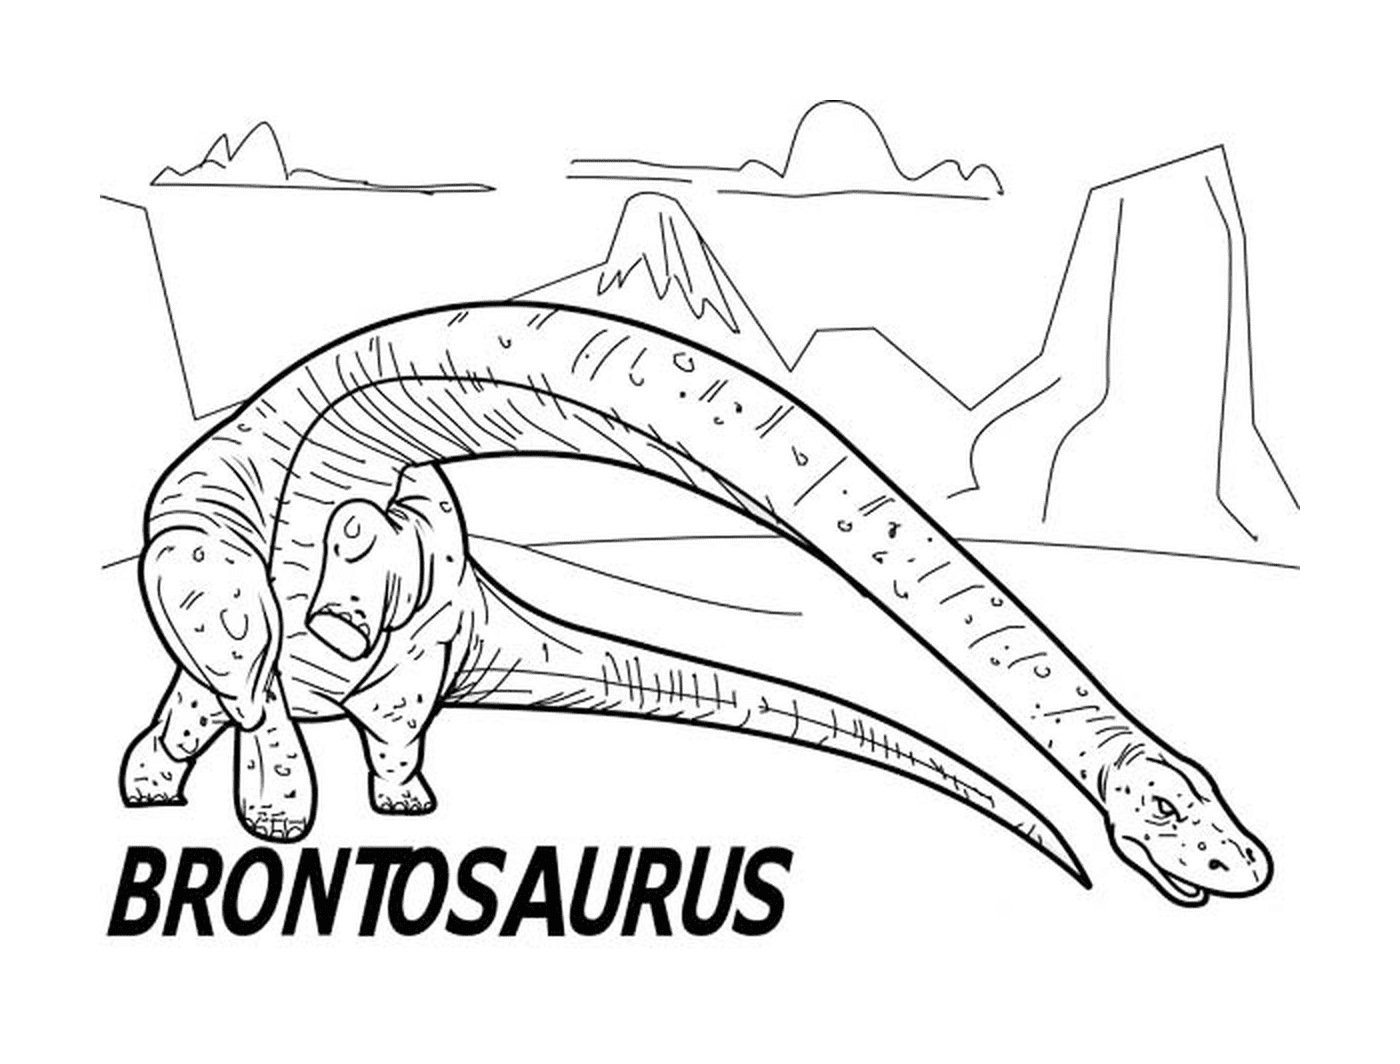   Brontosaurus du Jurassique, rencontre avec les dinosaures 